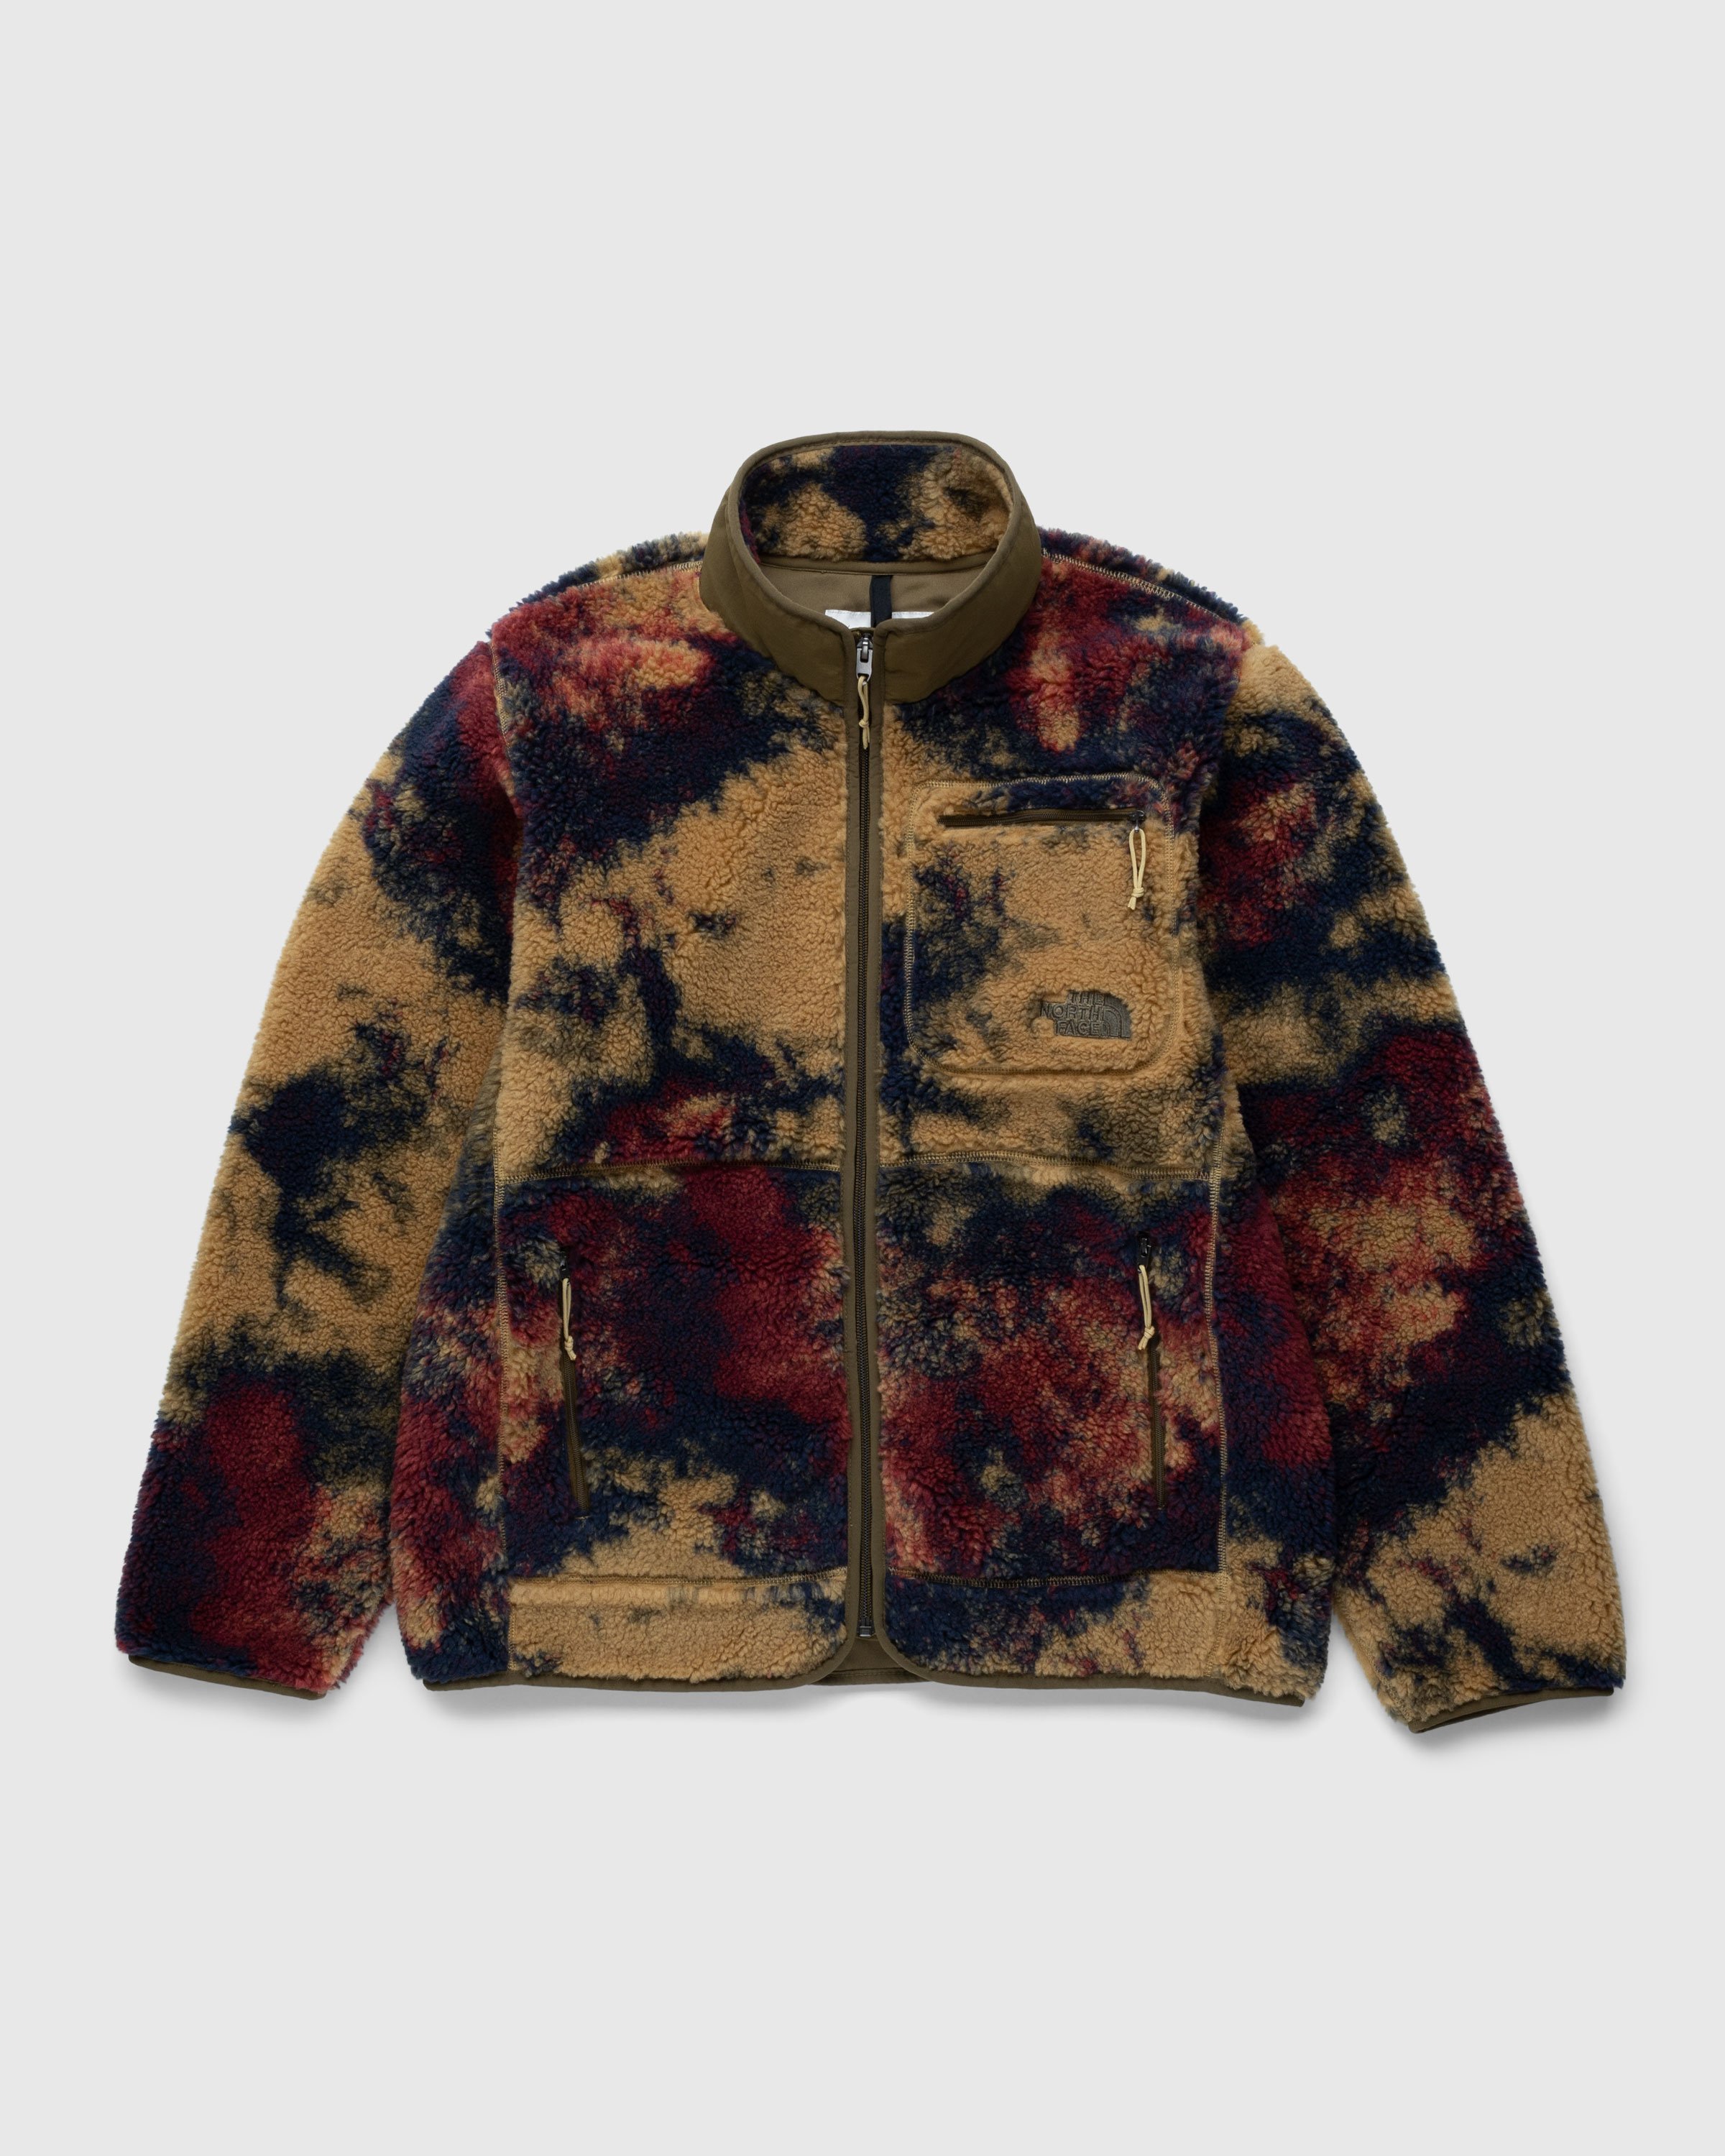 The North Face - Jacquard Extreme Pile Full-Zip Jacket Antelope Tan/Ice Dye Print - Clothing - Multi - Image 1